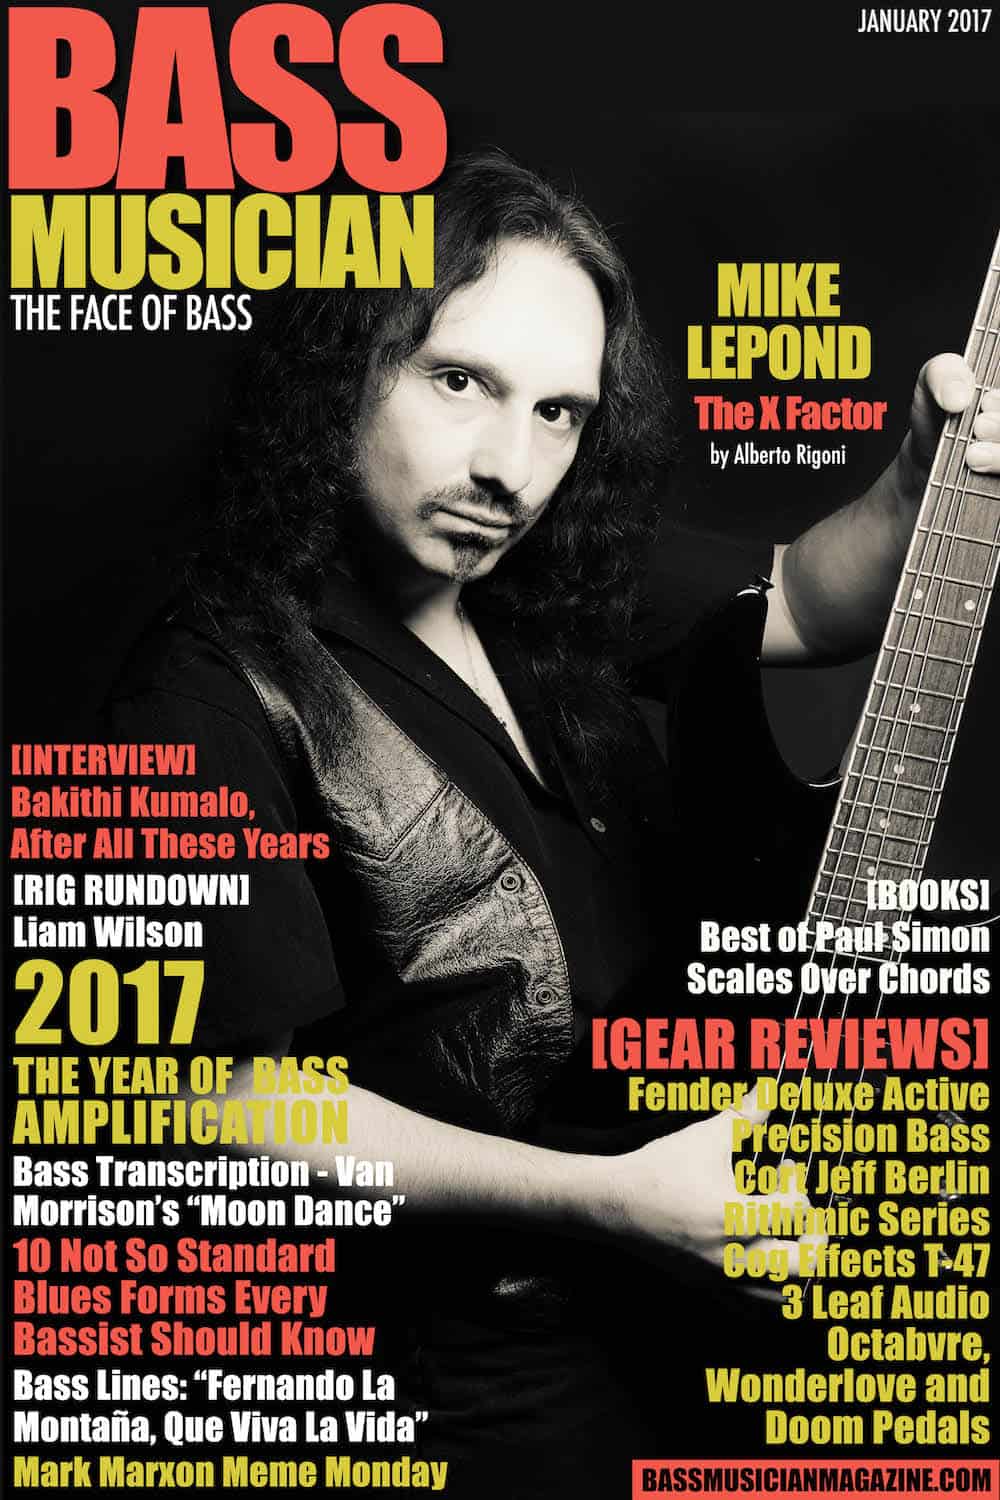 bass Musician Magazine - Mike LePond